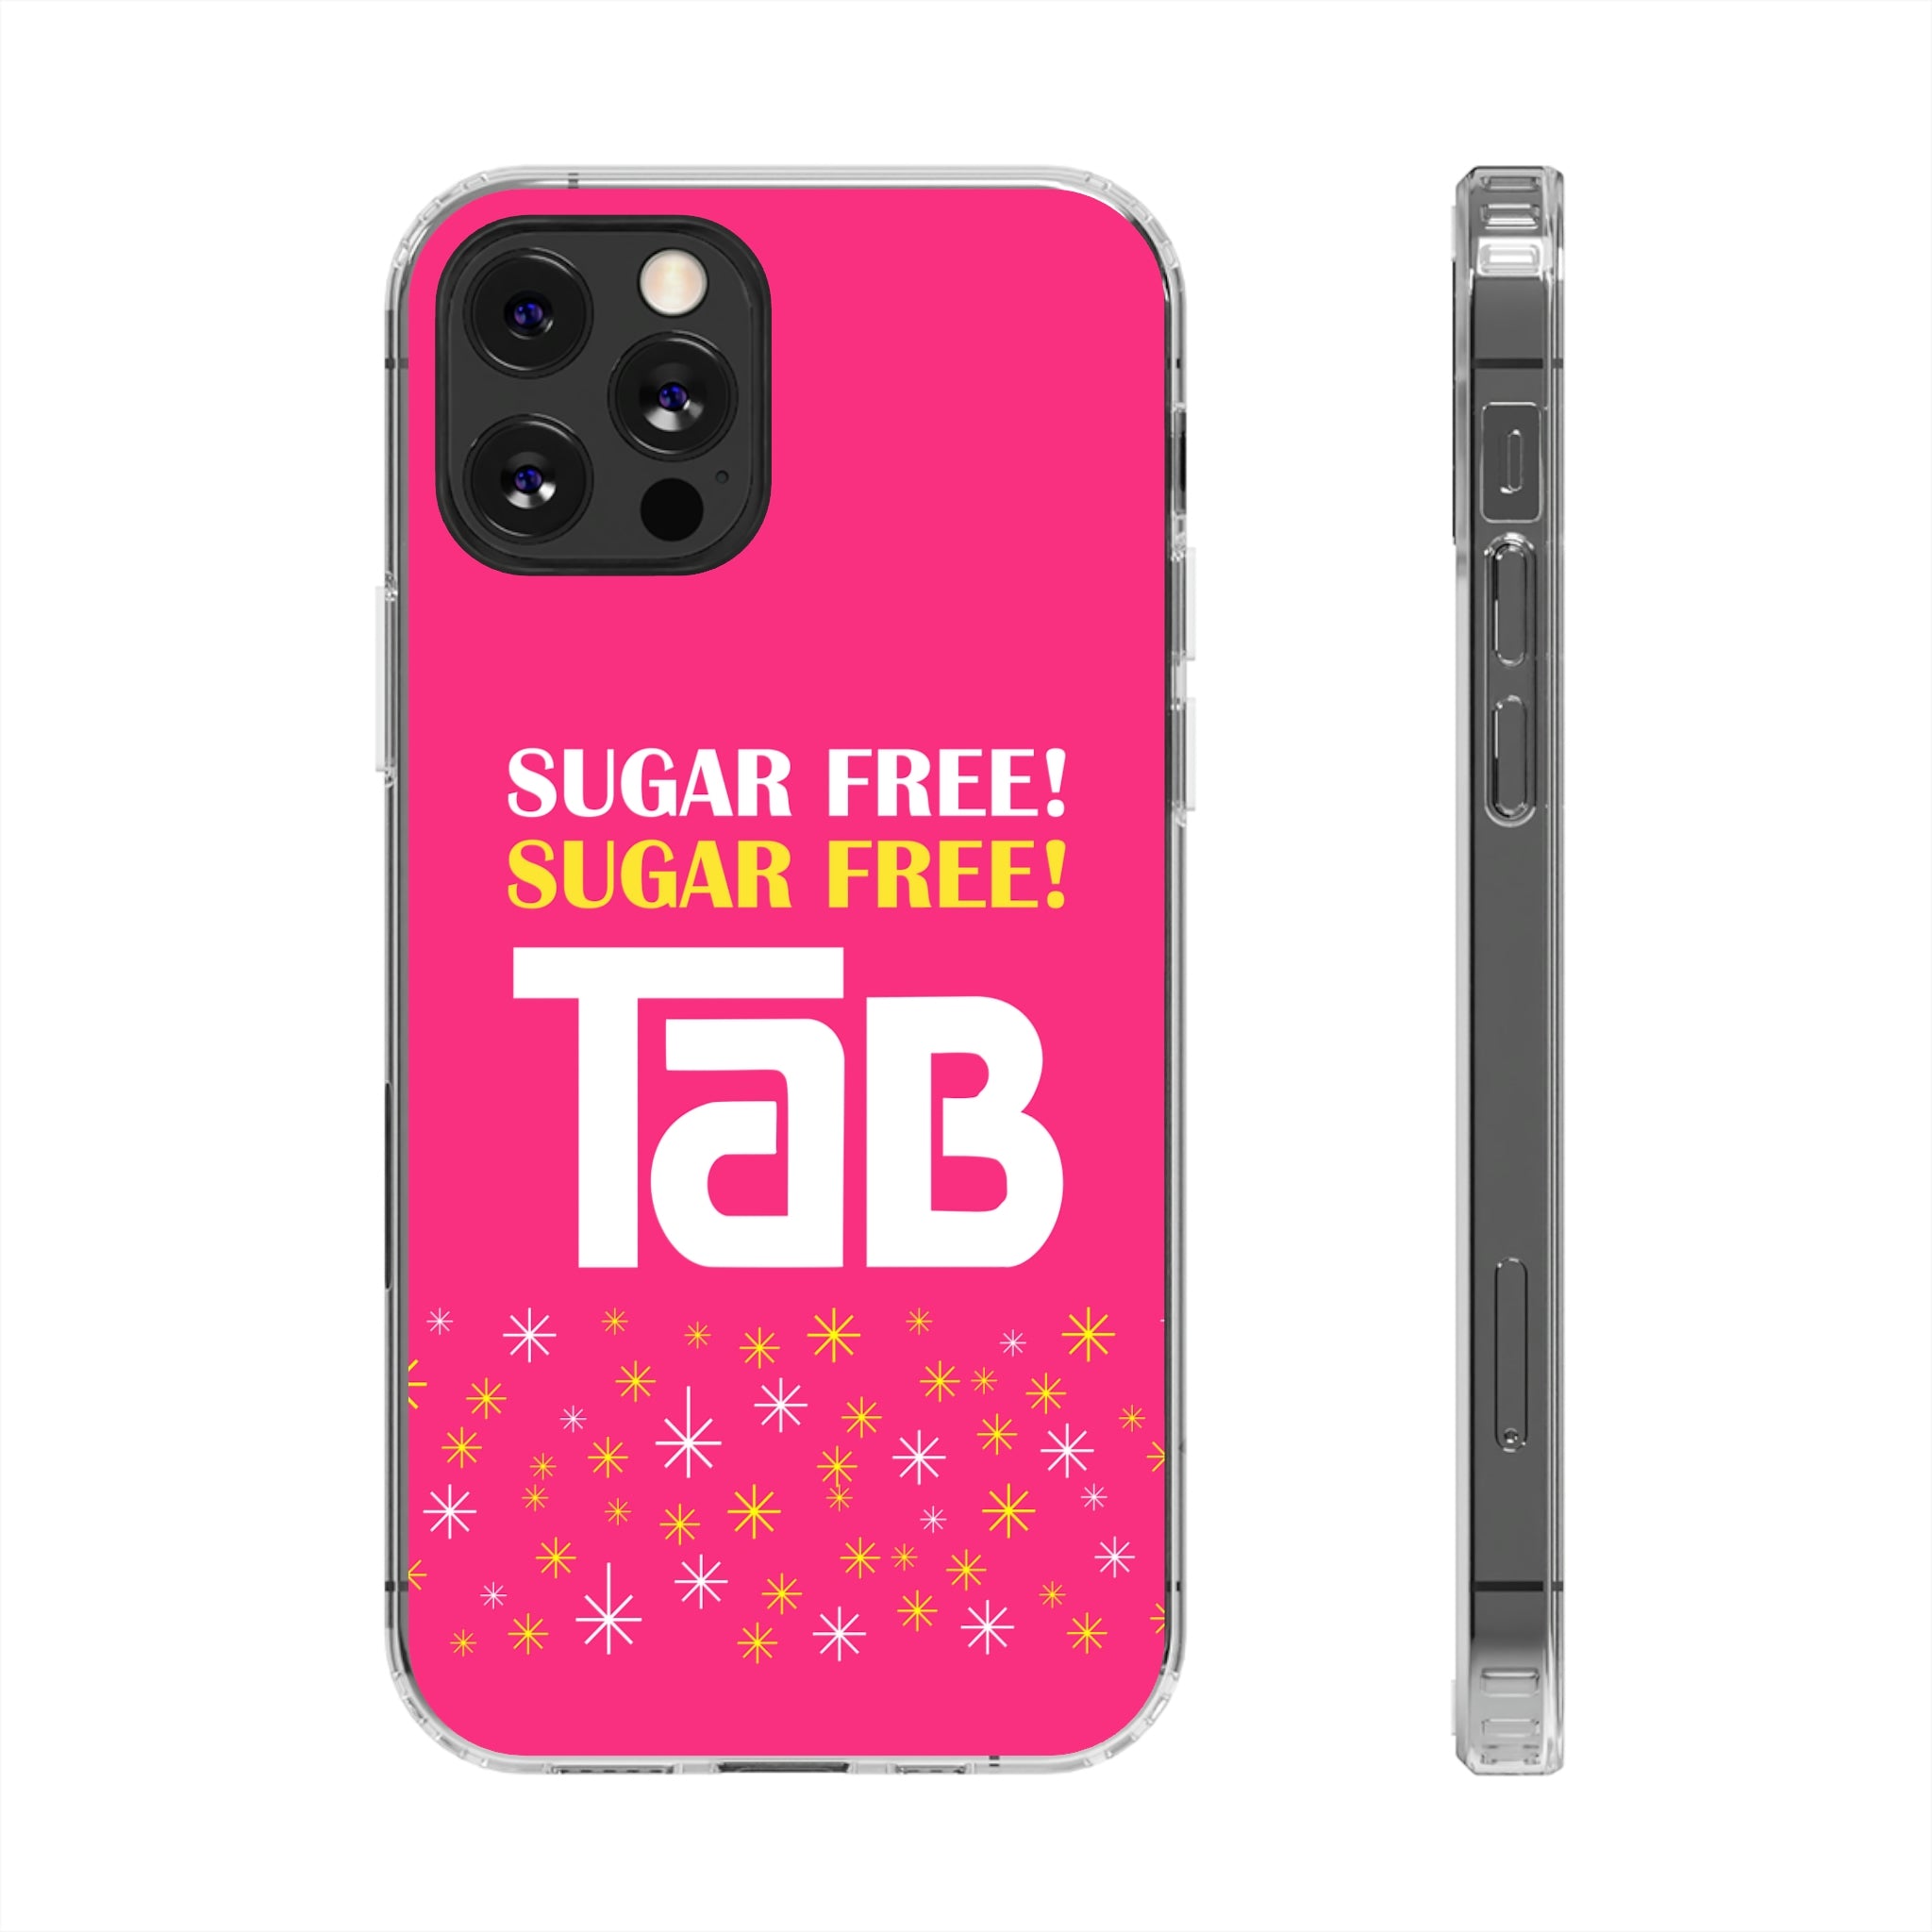 Sugar Free TAB iPhone Case